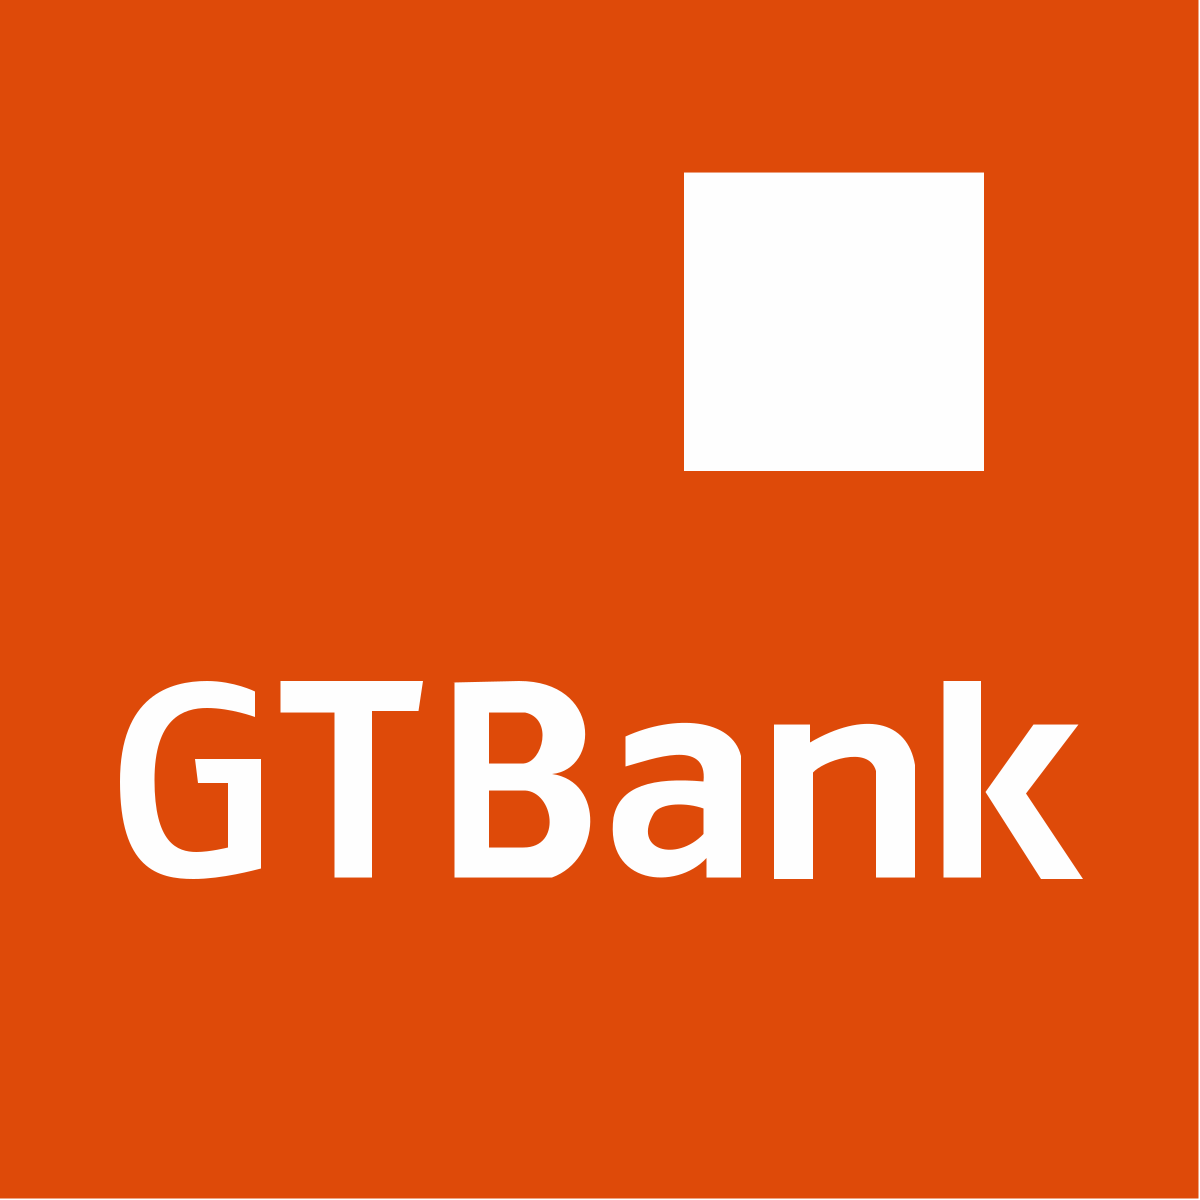 Guaranty Trust Bank Job Aptitude Test Past Questions